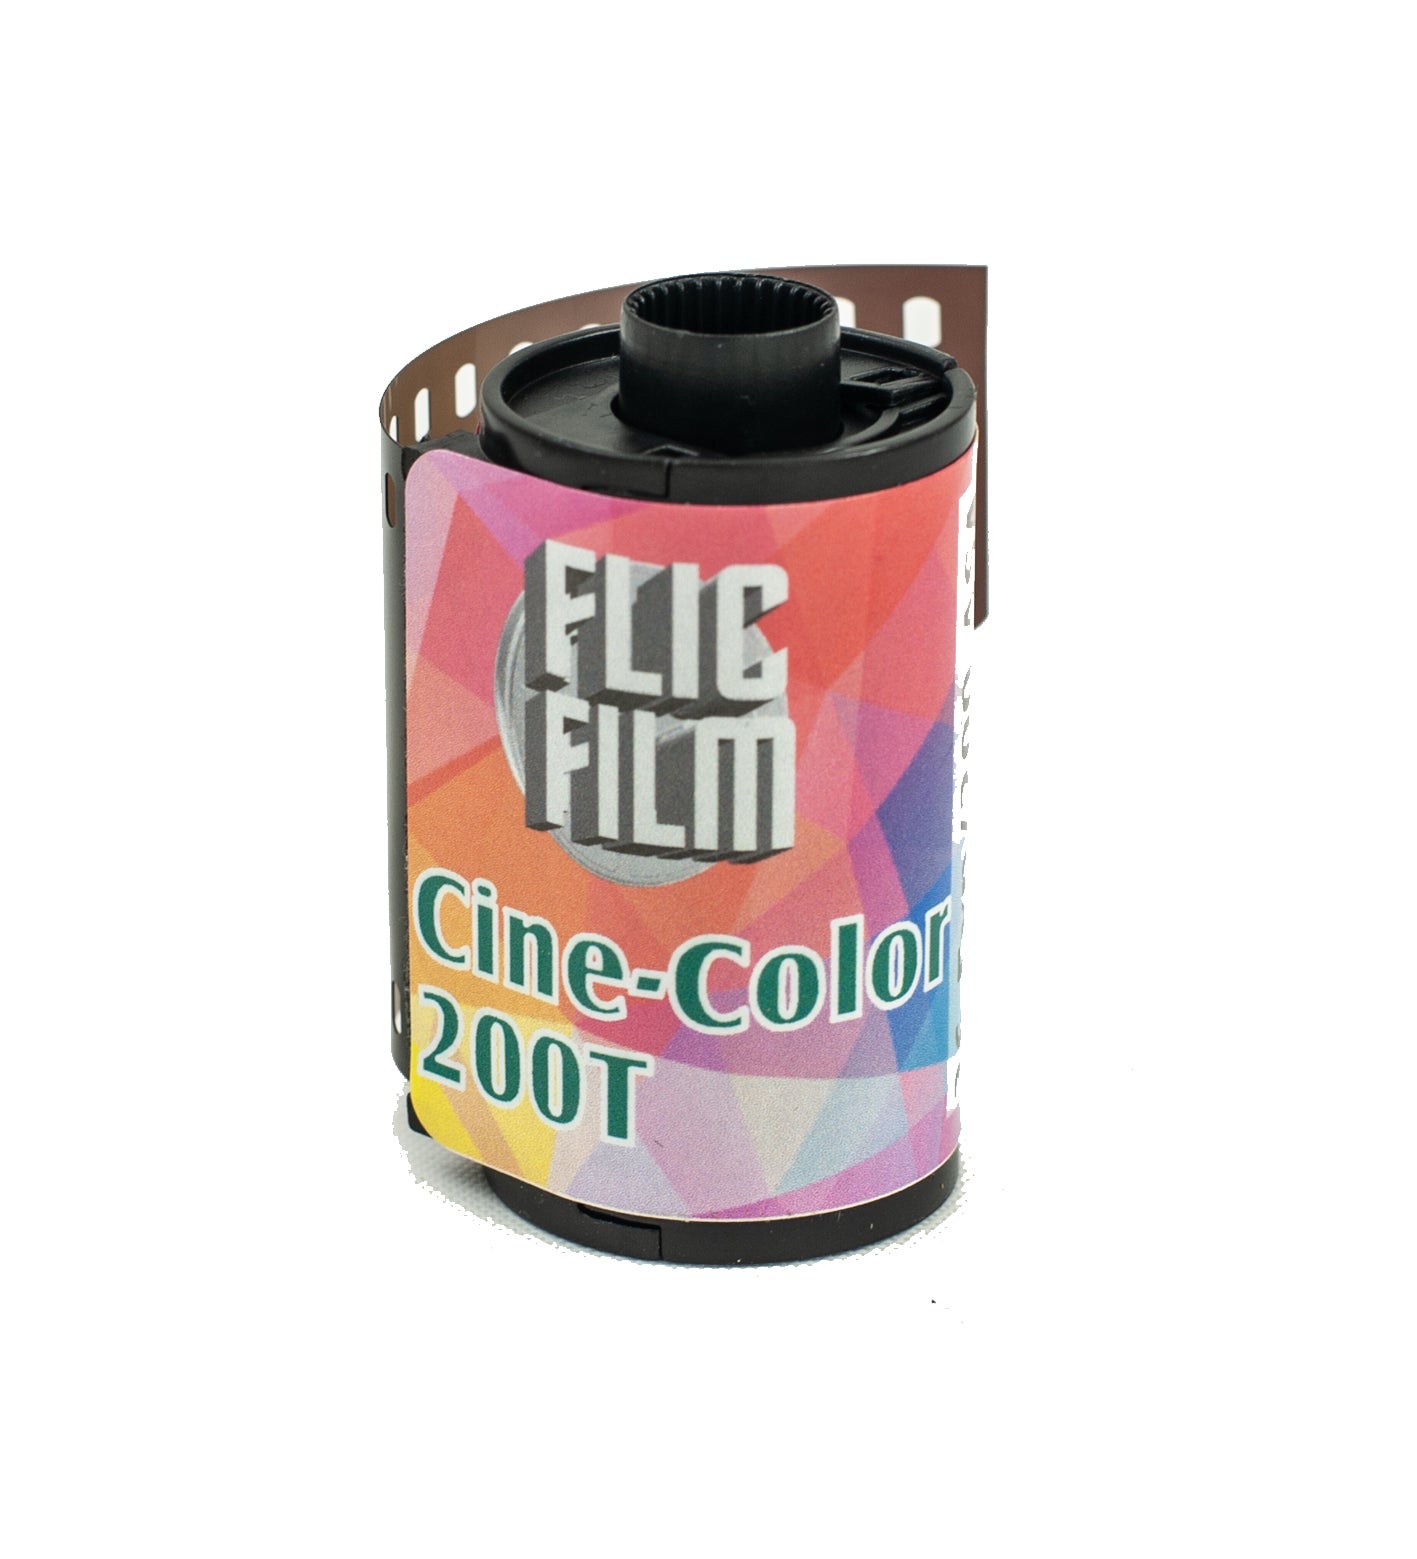 Flic Film Cinecolor 200T 35mm Film 30 Exposures (£10.99 incl VAT)